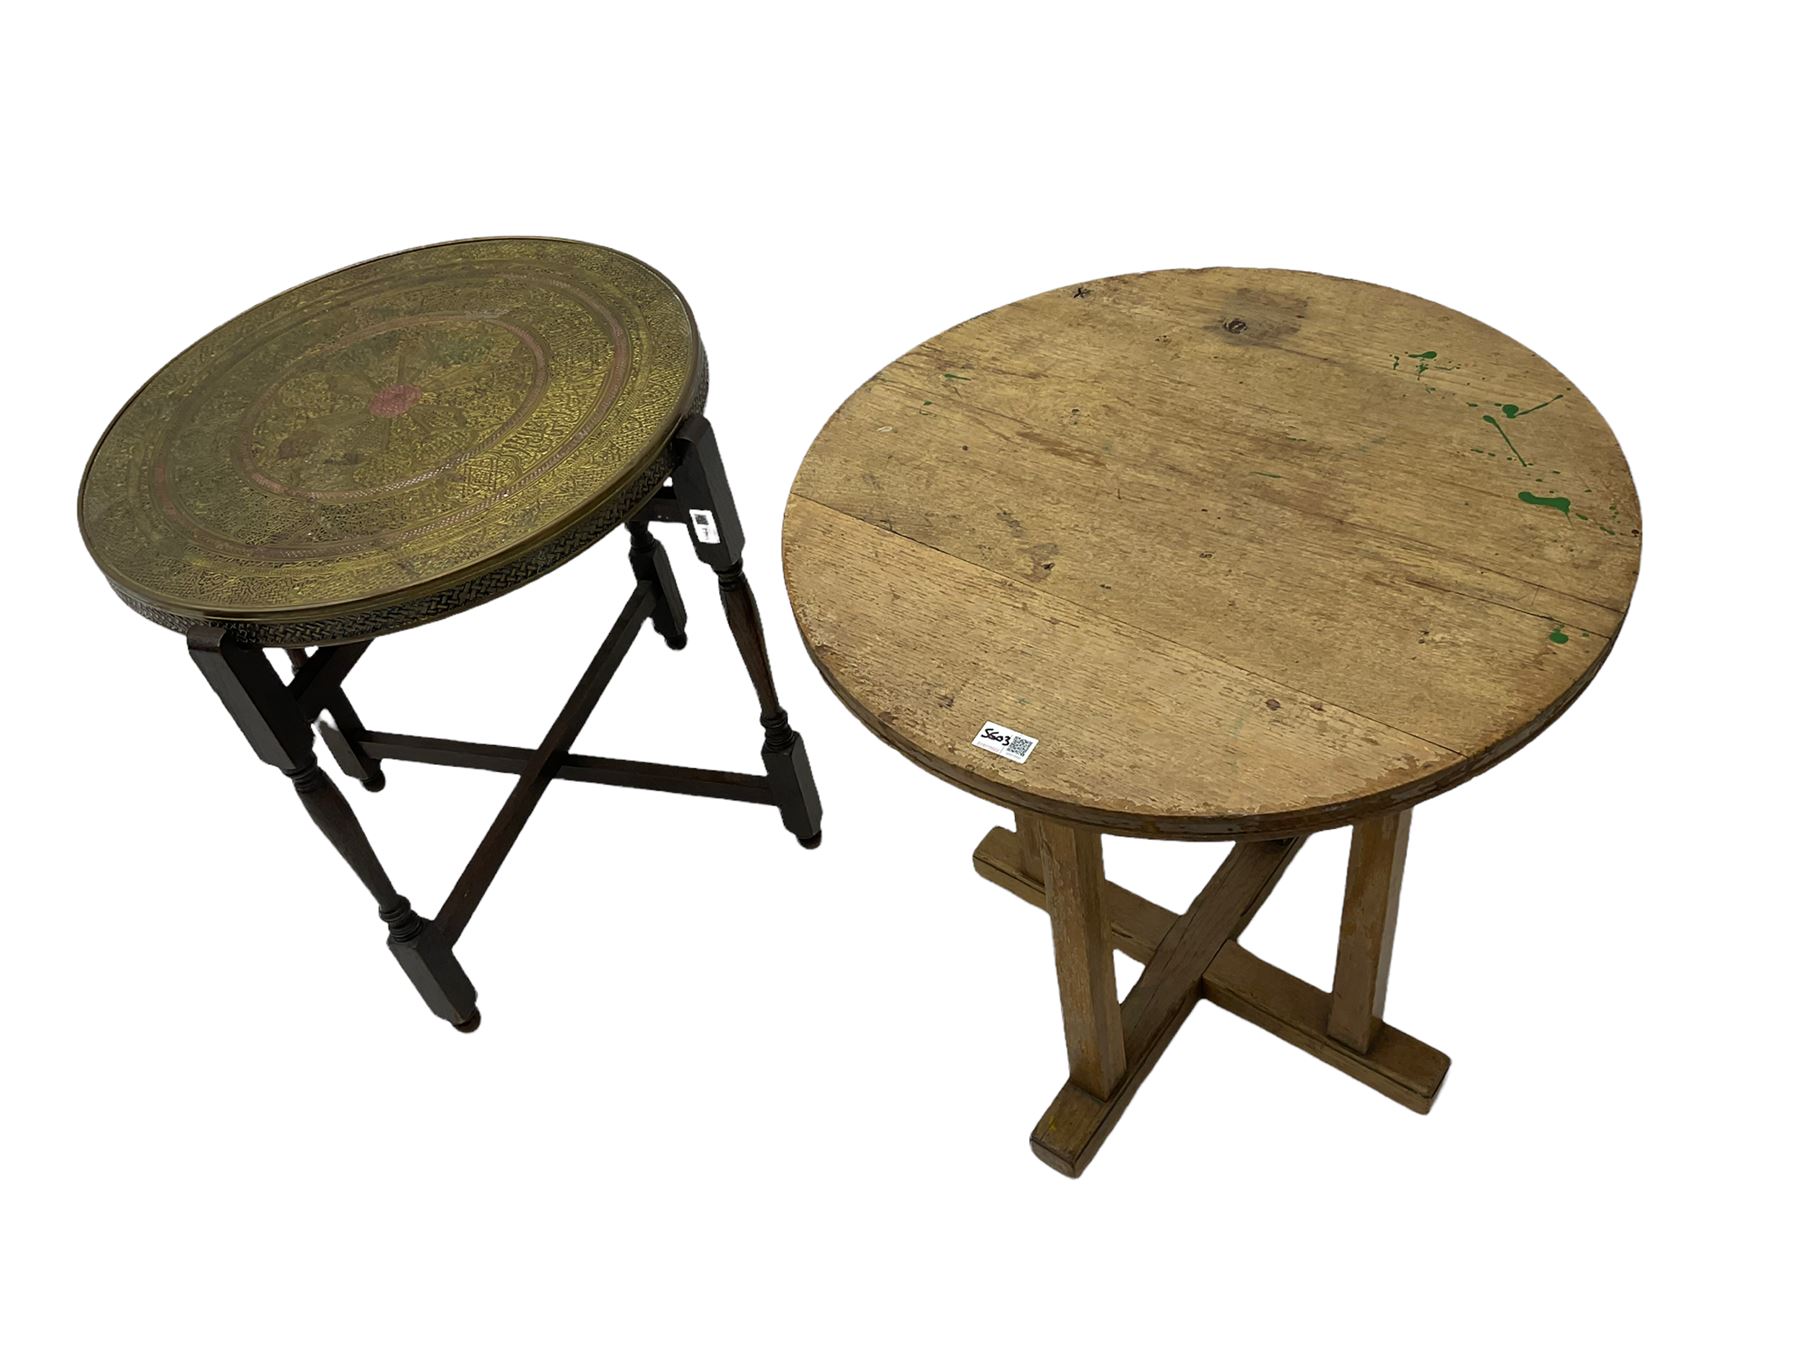 Eastern Benares copper top table and an oak GRVI oak circular table - Image 3 of 3